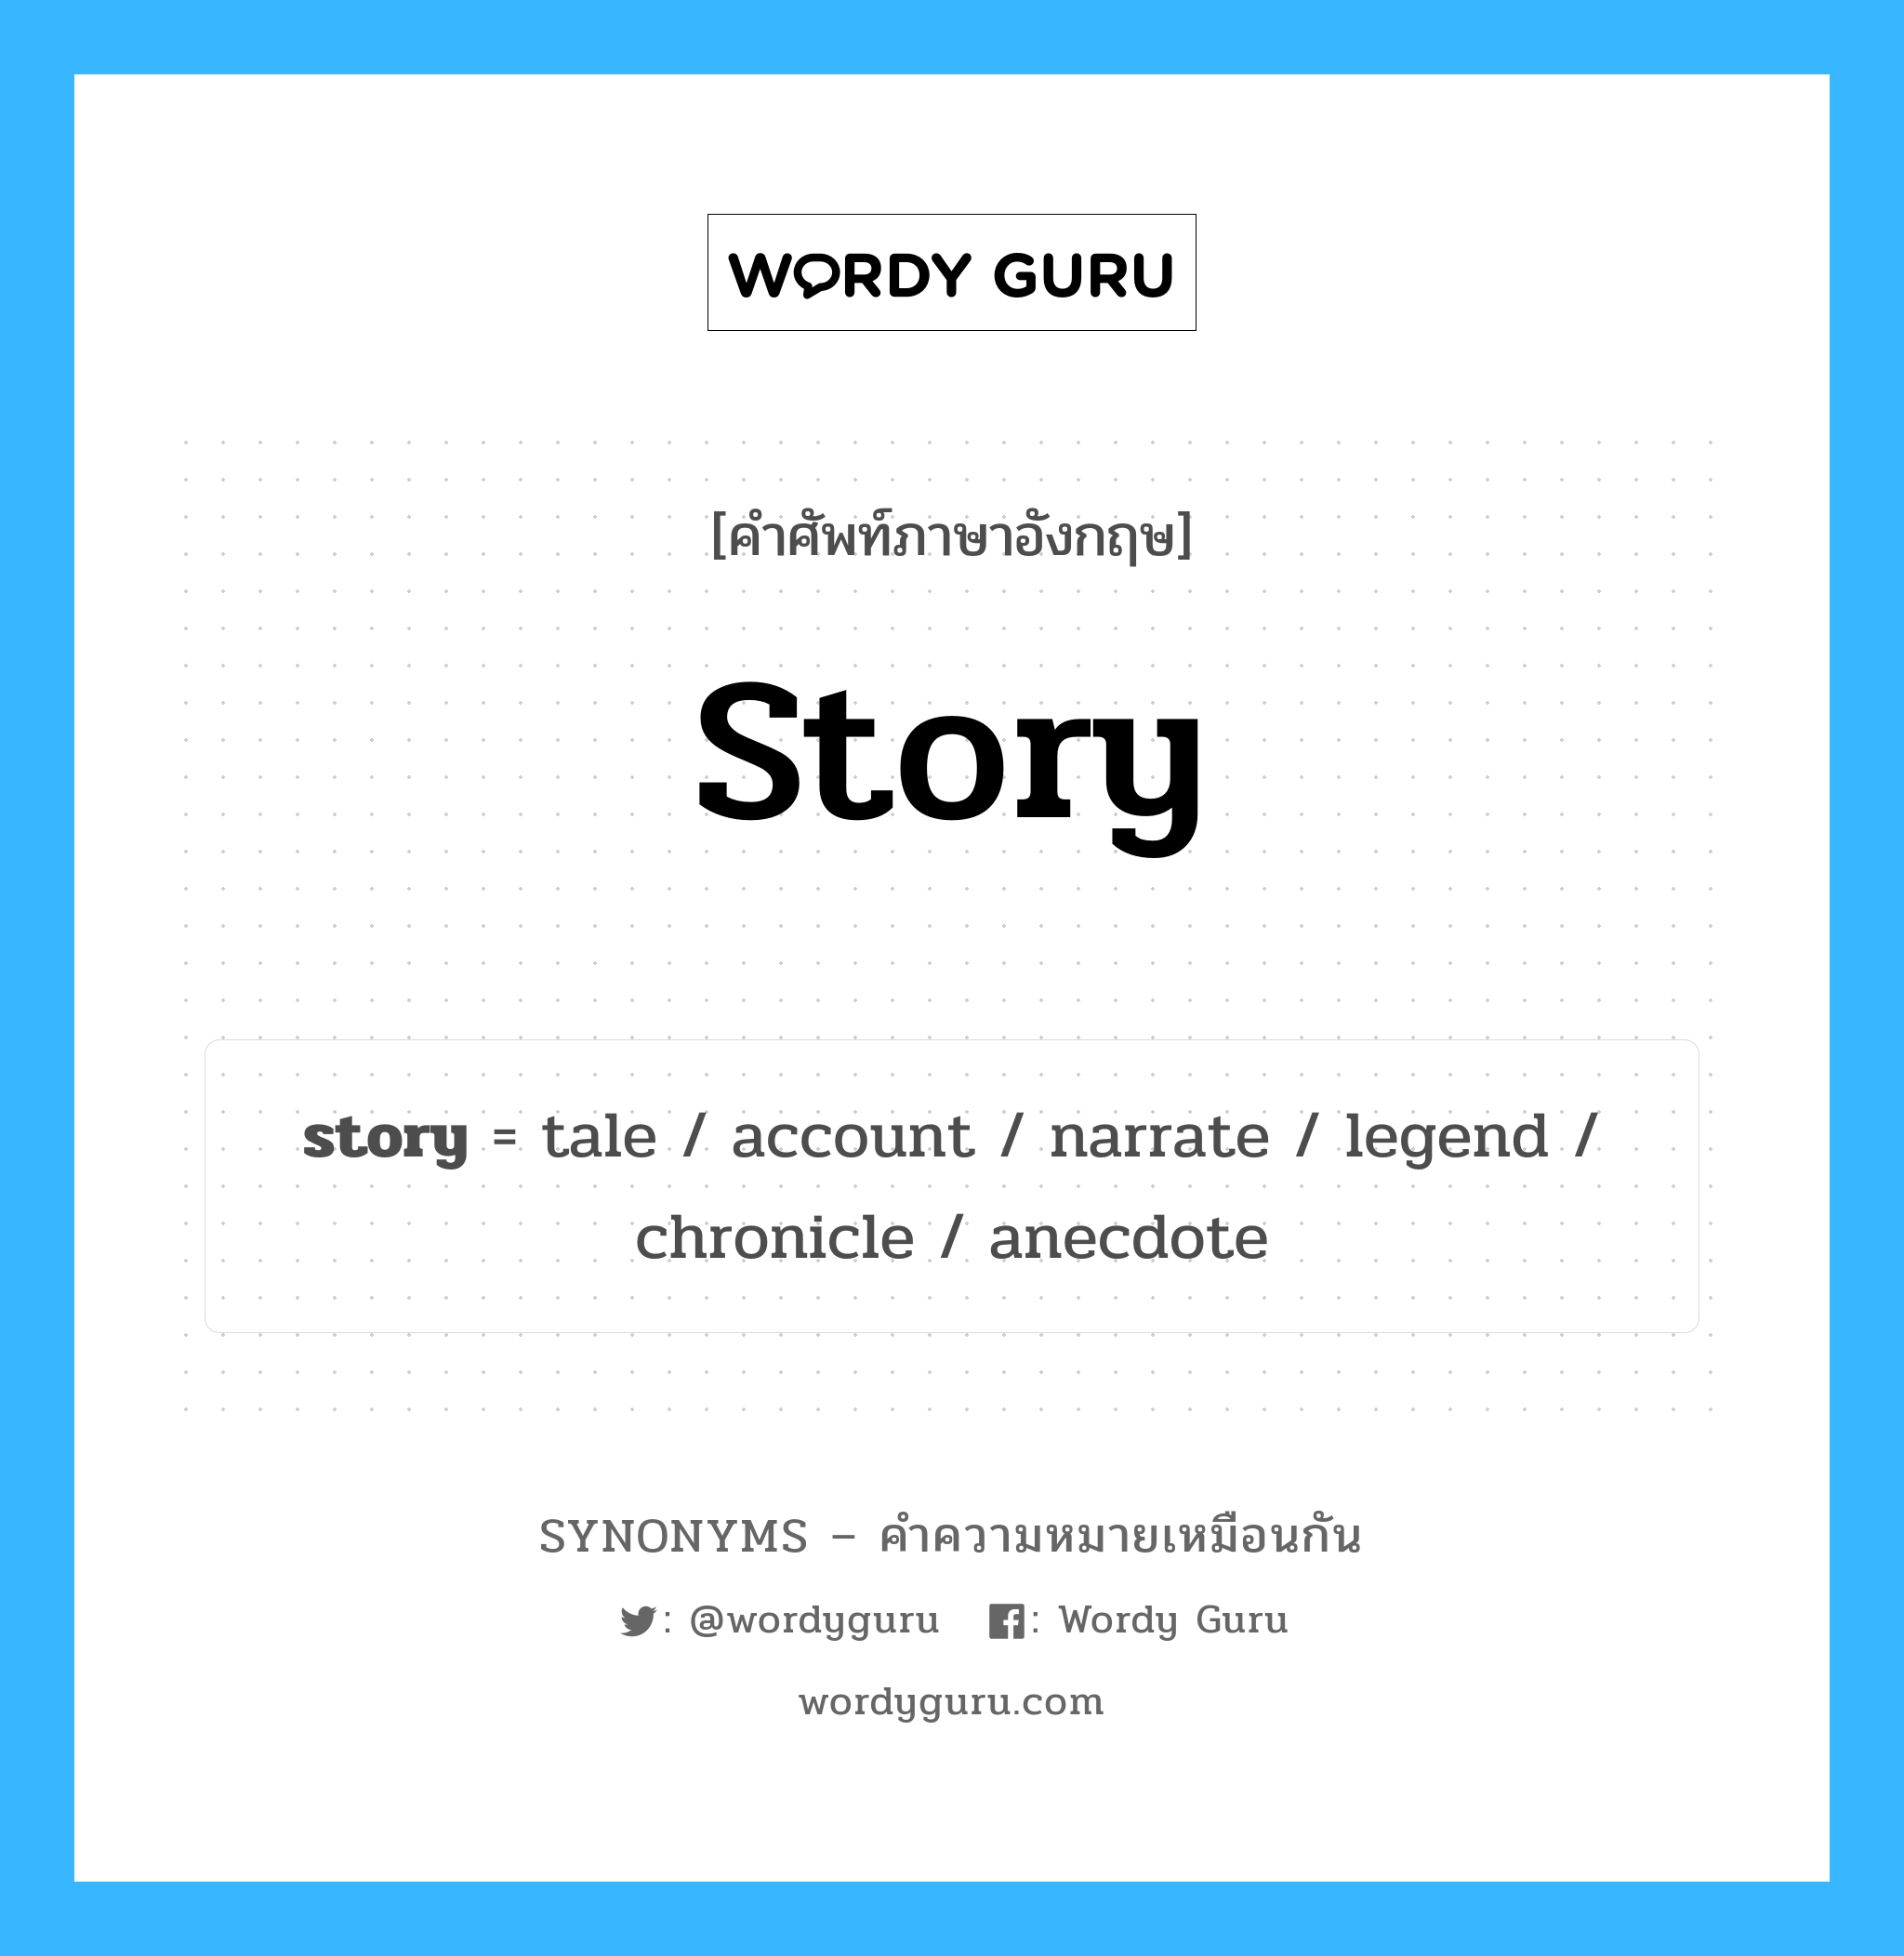 narrate เป็นหนึ่งใน story และมีคำอื่น ๆ อีกดังนี้, คำศัพท์ภาษาอังกฤษ narrate ความหมายคล้ายกันกับ story แปลว่า บรรยาย หมวด story